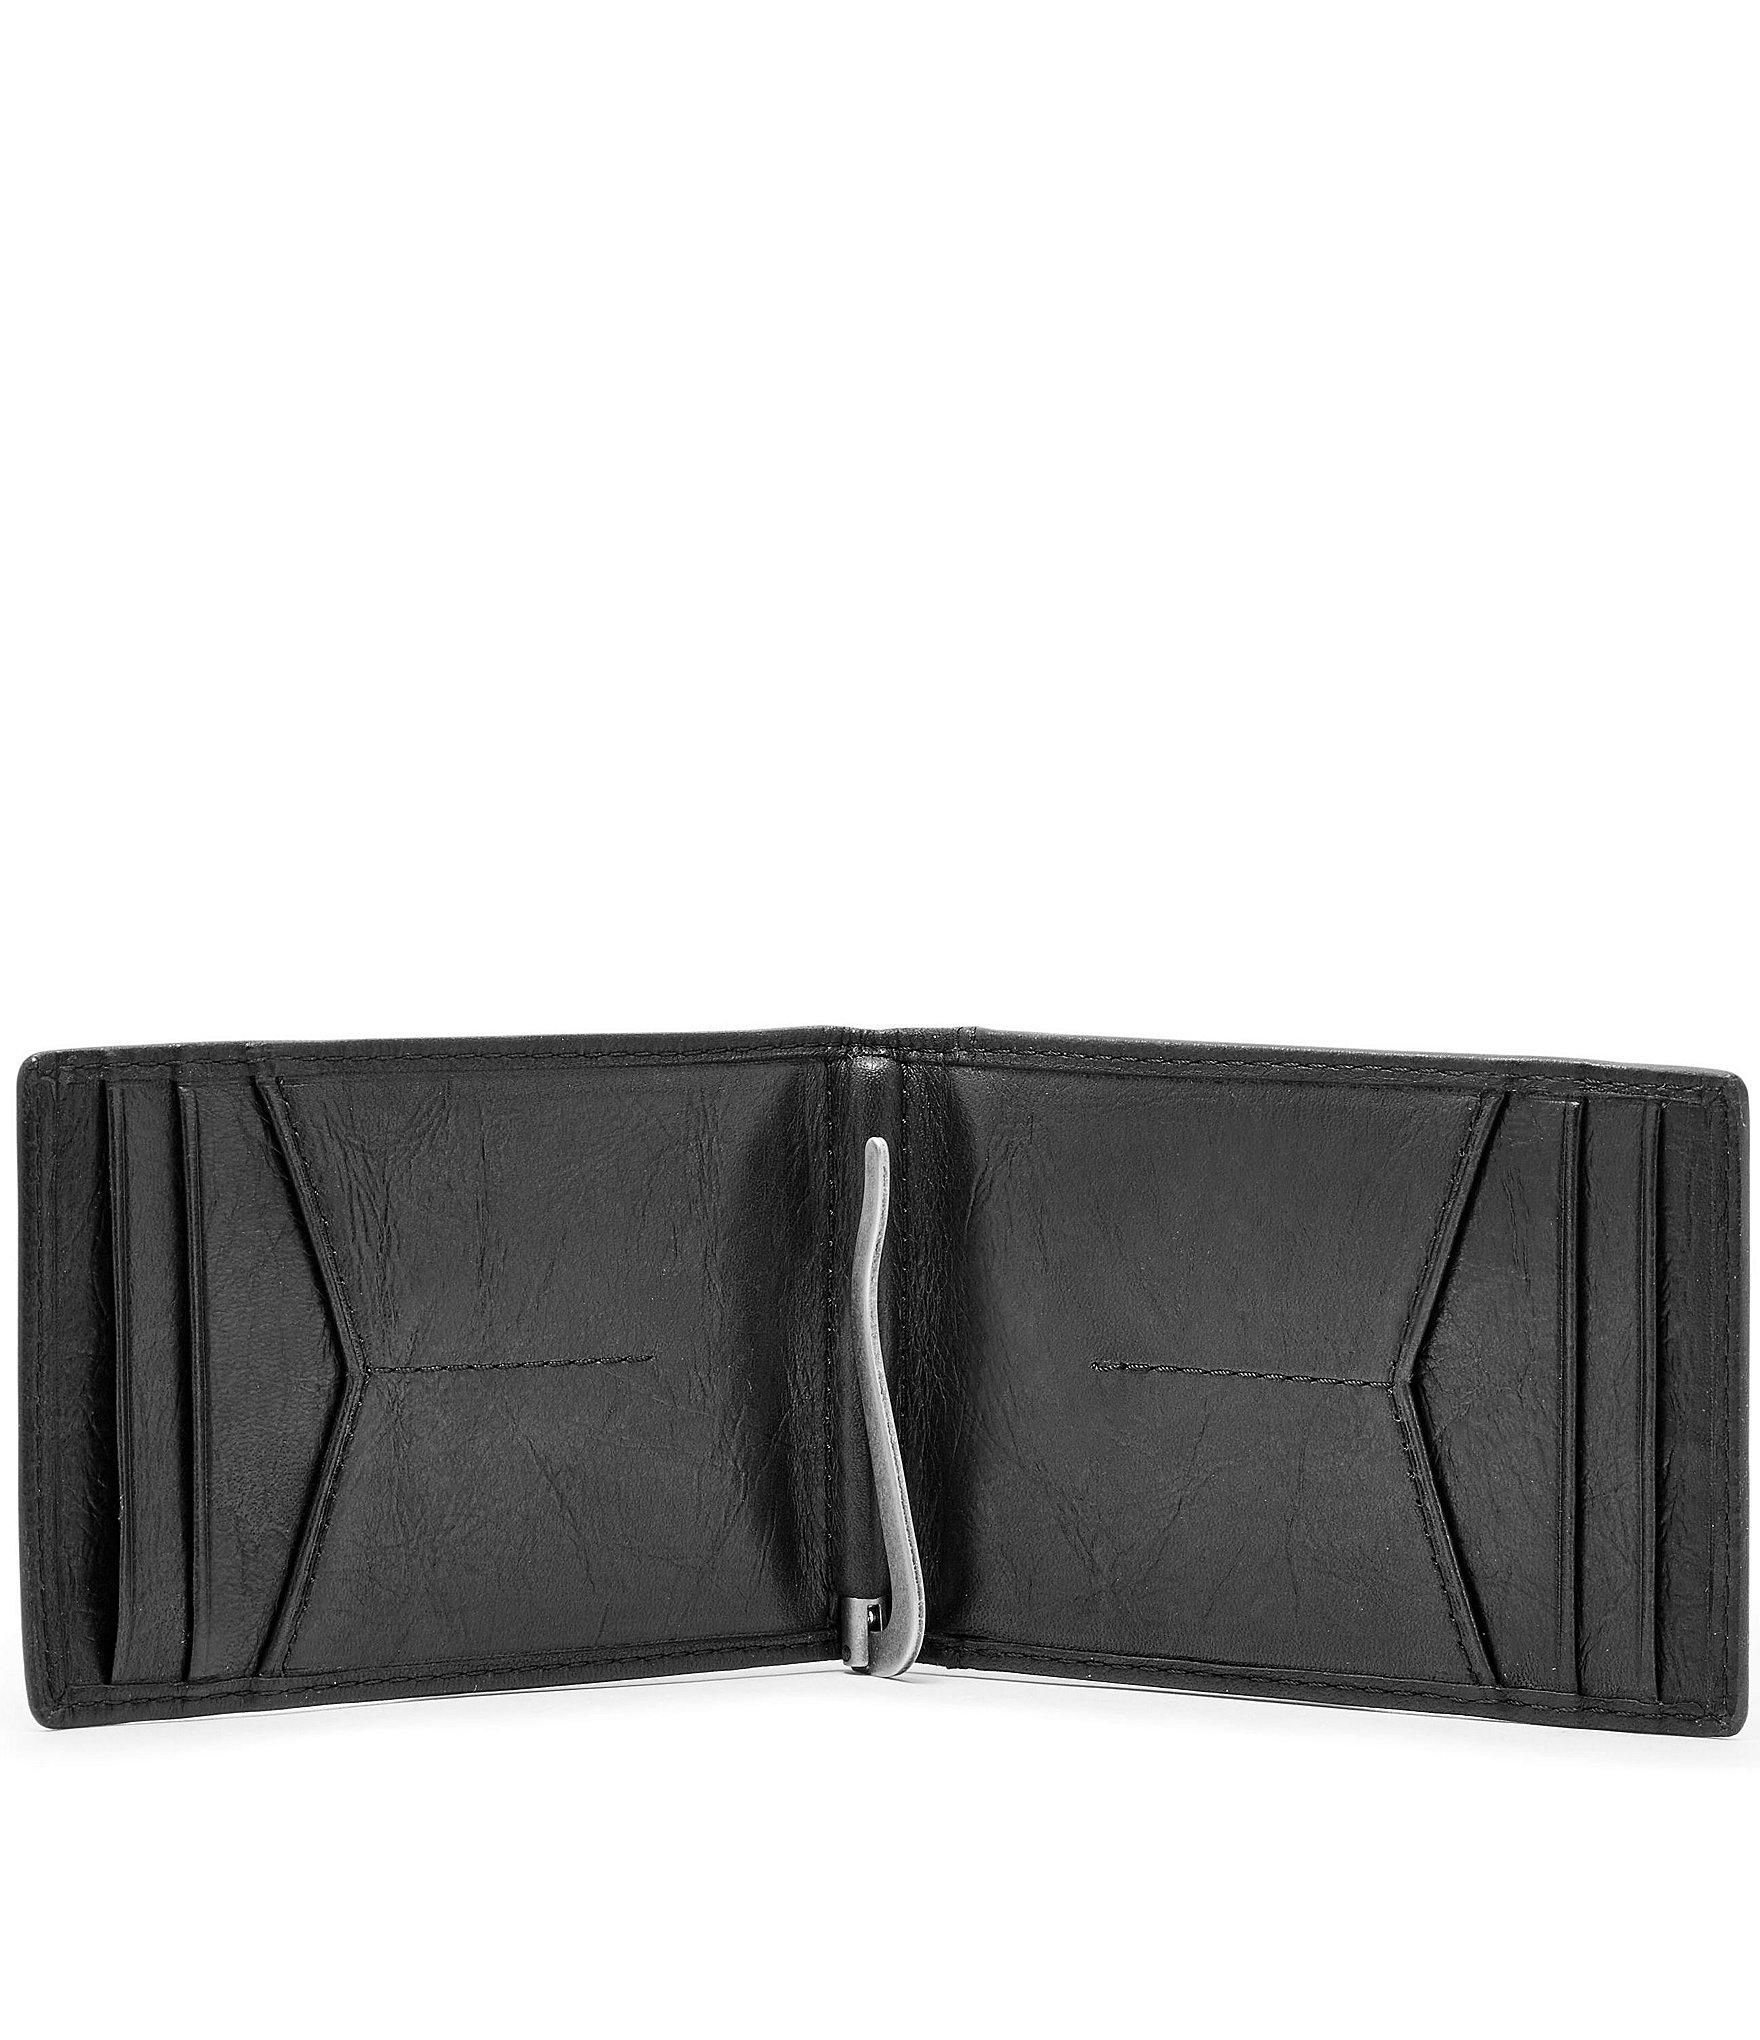 Lyst - Fossil Ingram Rfid Leather Money Clip Bifold Wallet in Black for Men